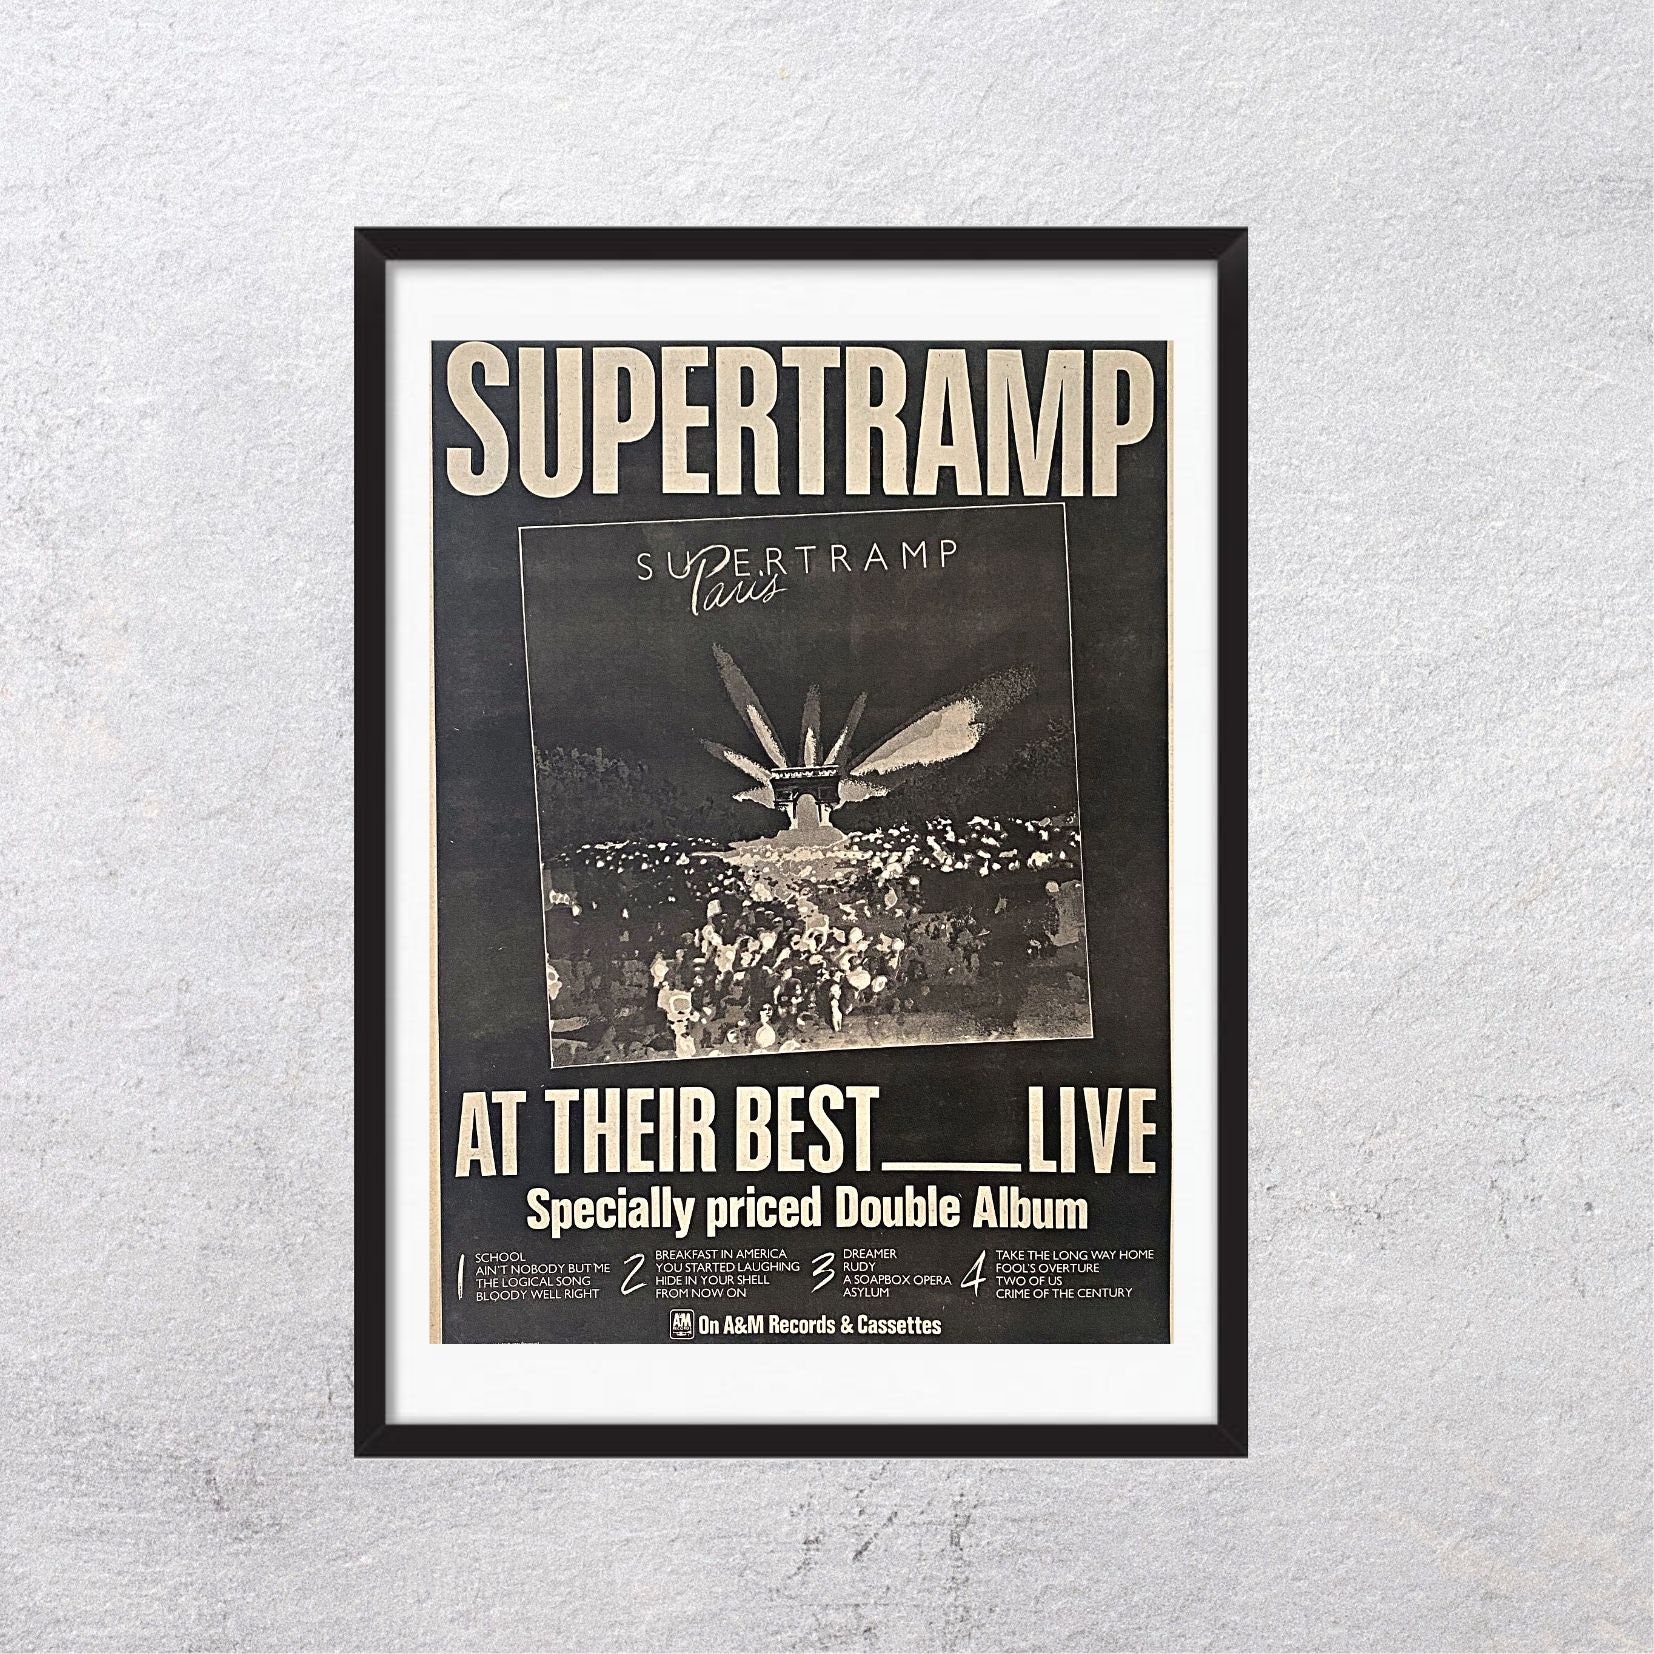 Supertramp - Alive In England [CD] – Renaissance Records US